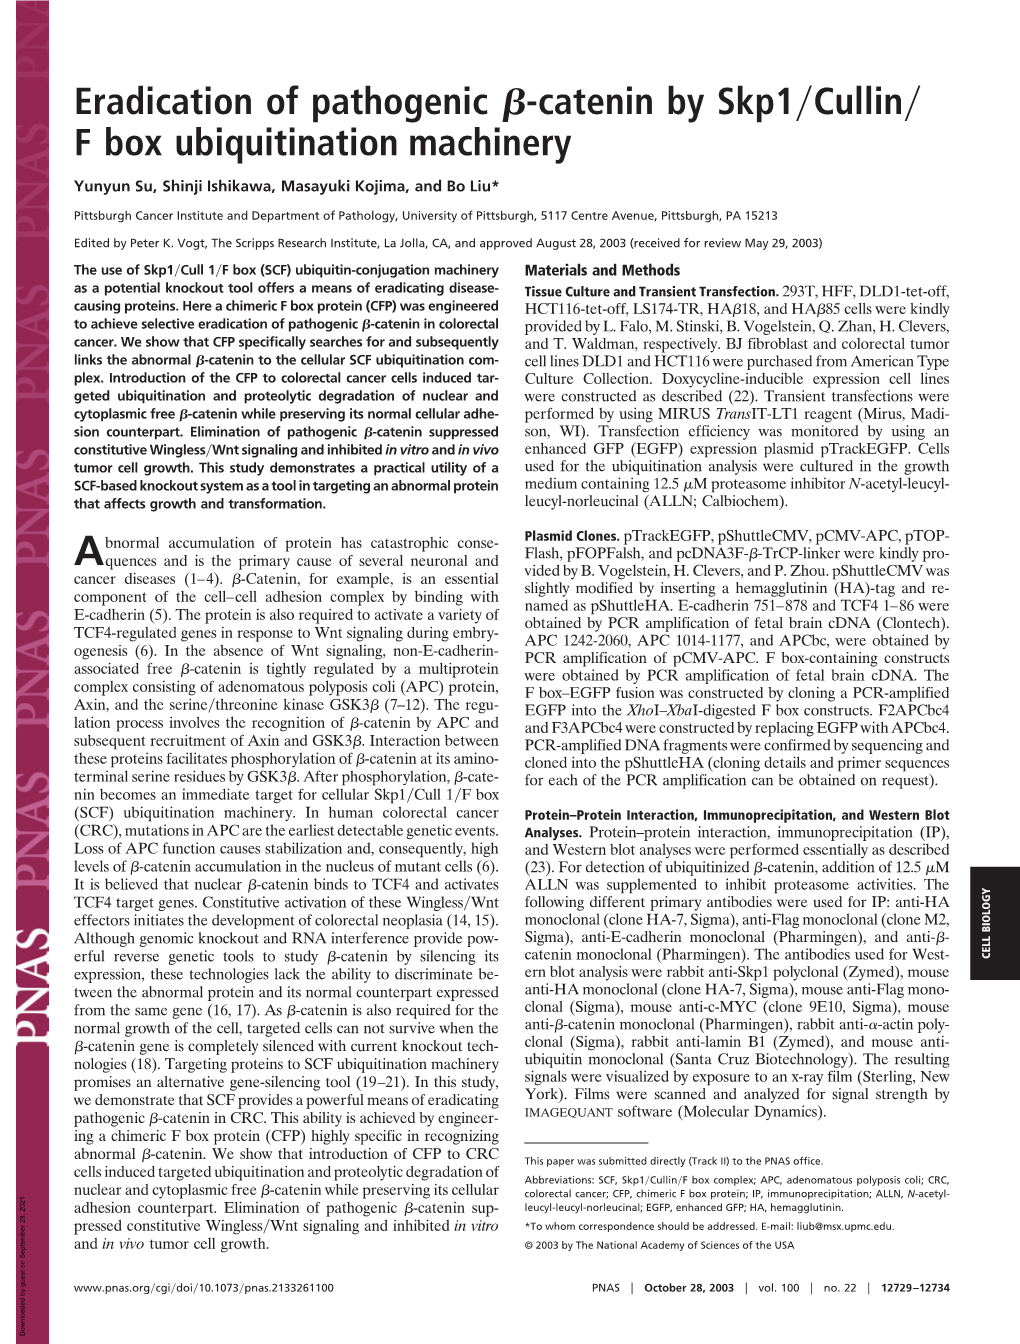 Eradication of Pathogenic ß-Catenin by Skp1 Cullin F Box Ubiquitination